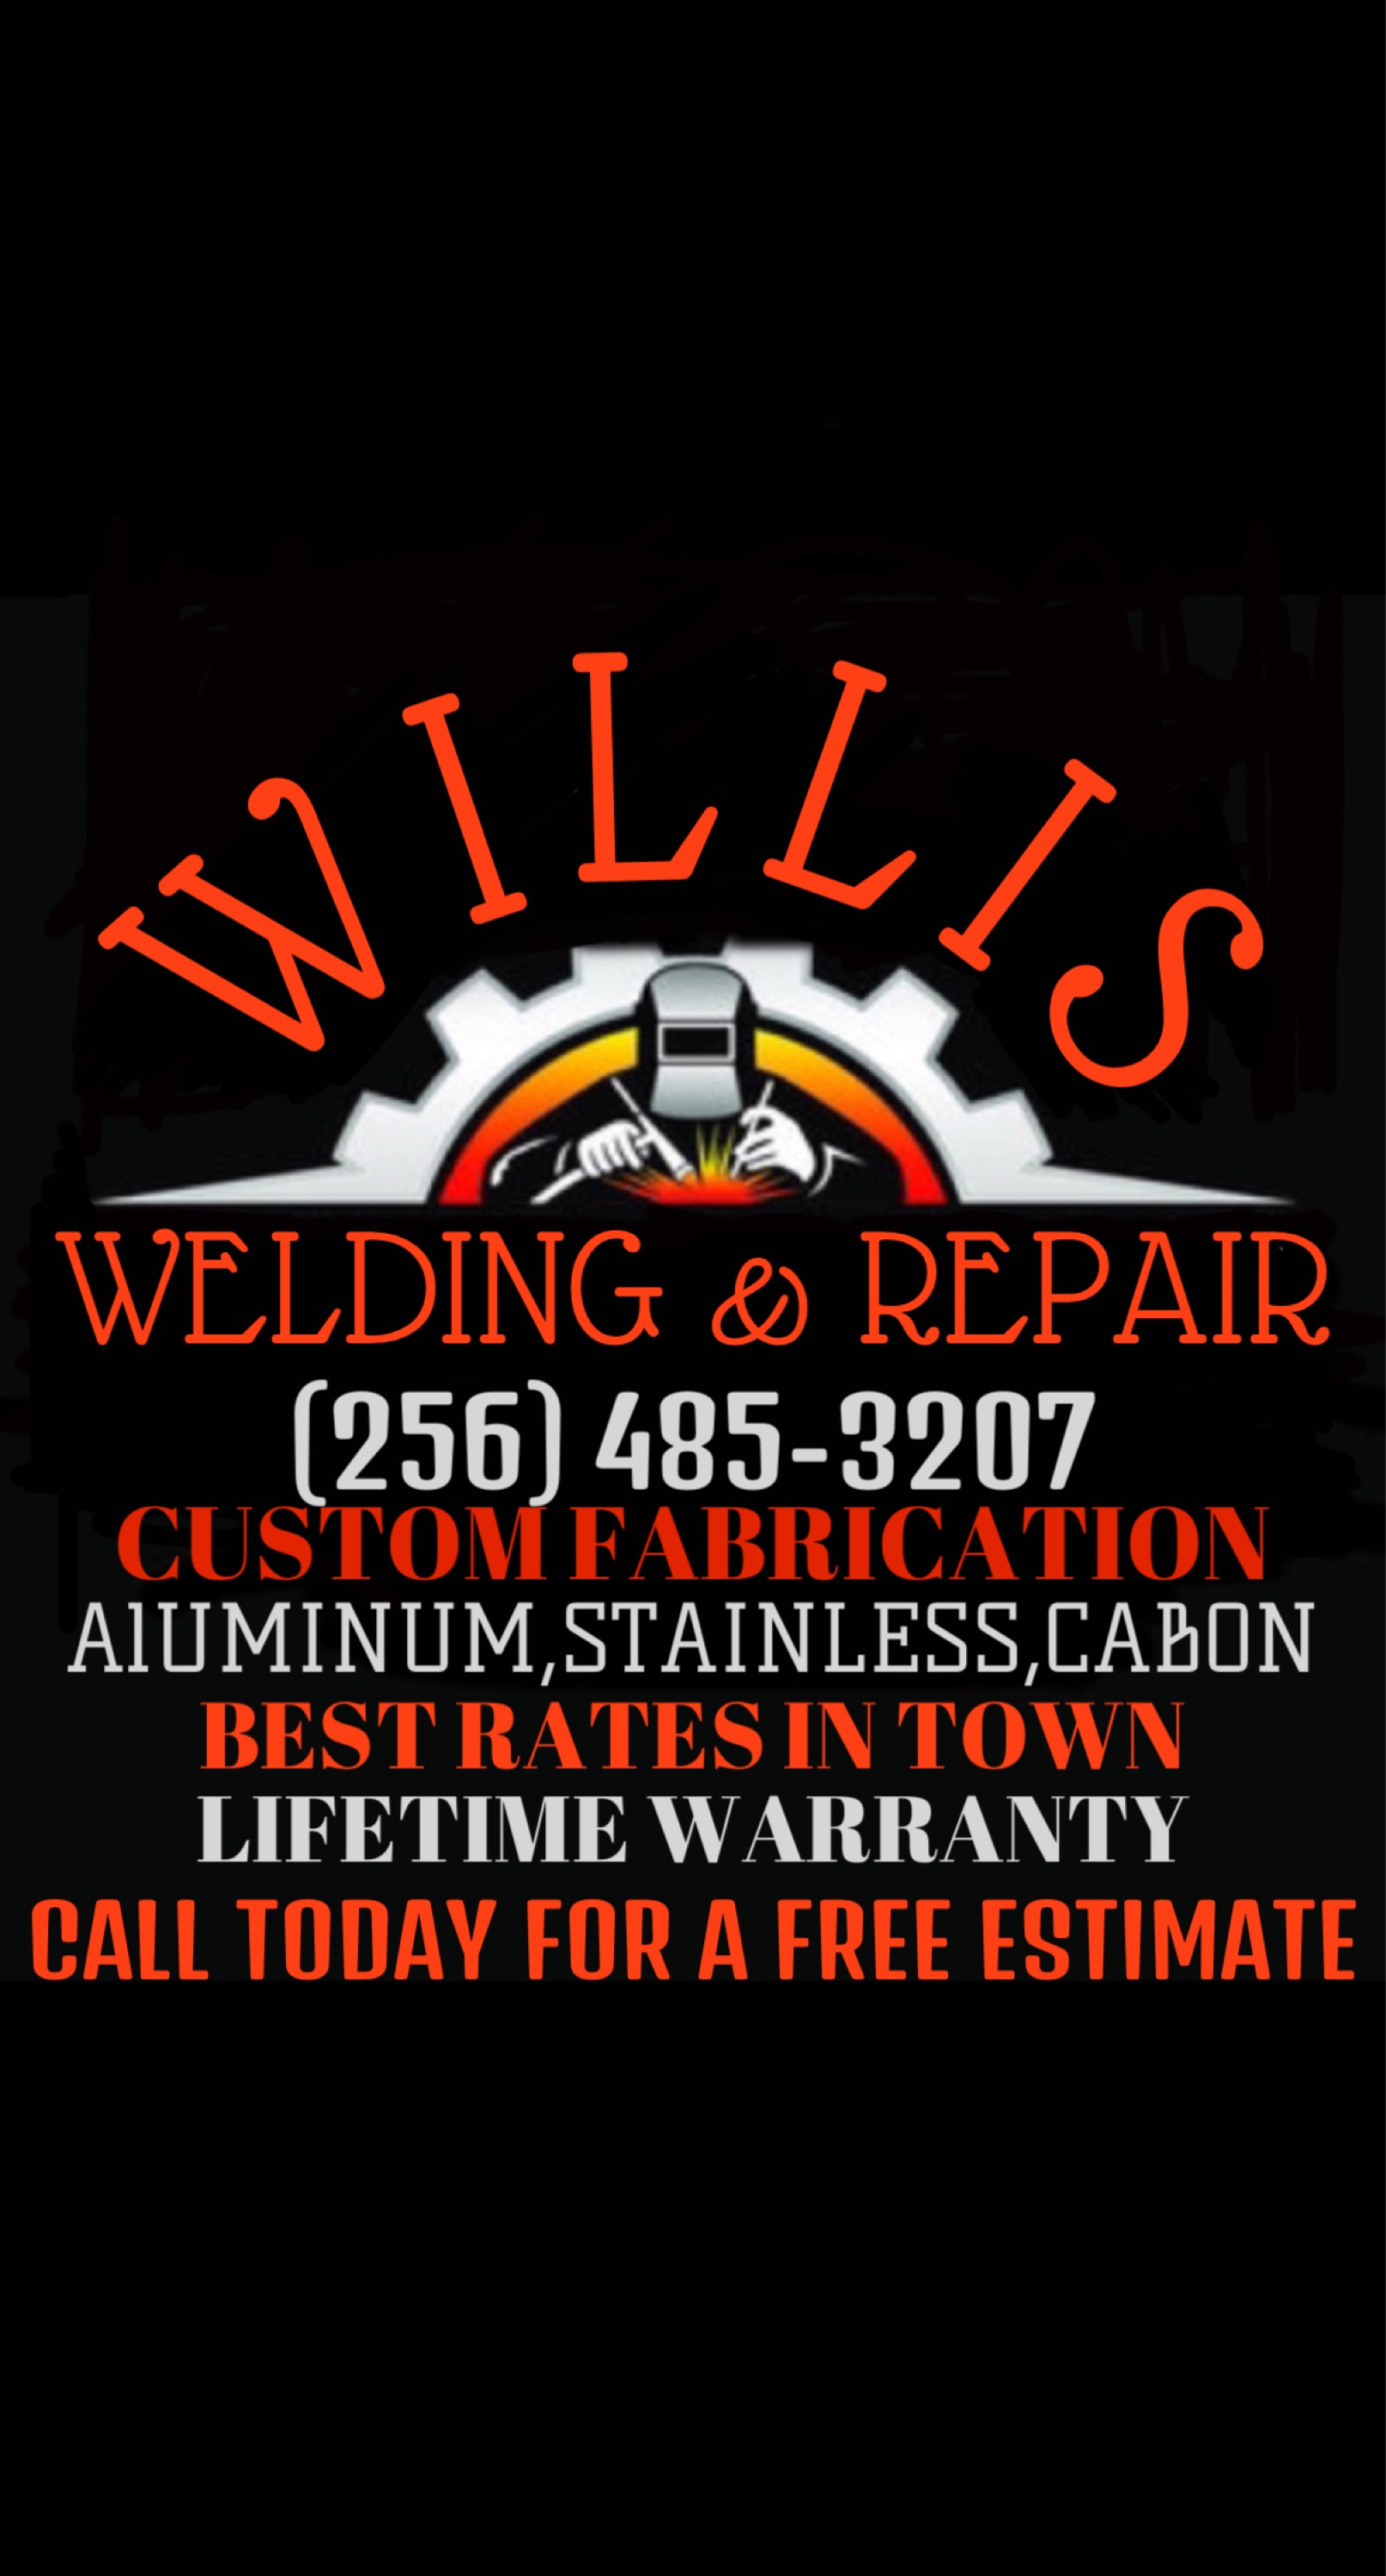 Willis Welding & Repair Logo